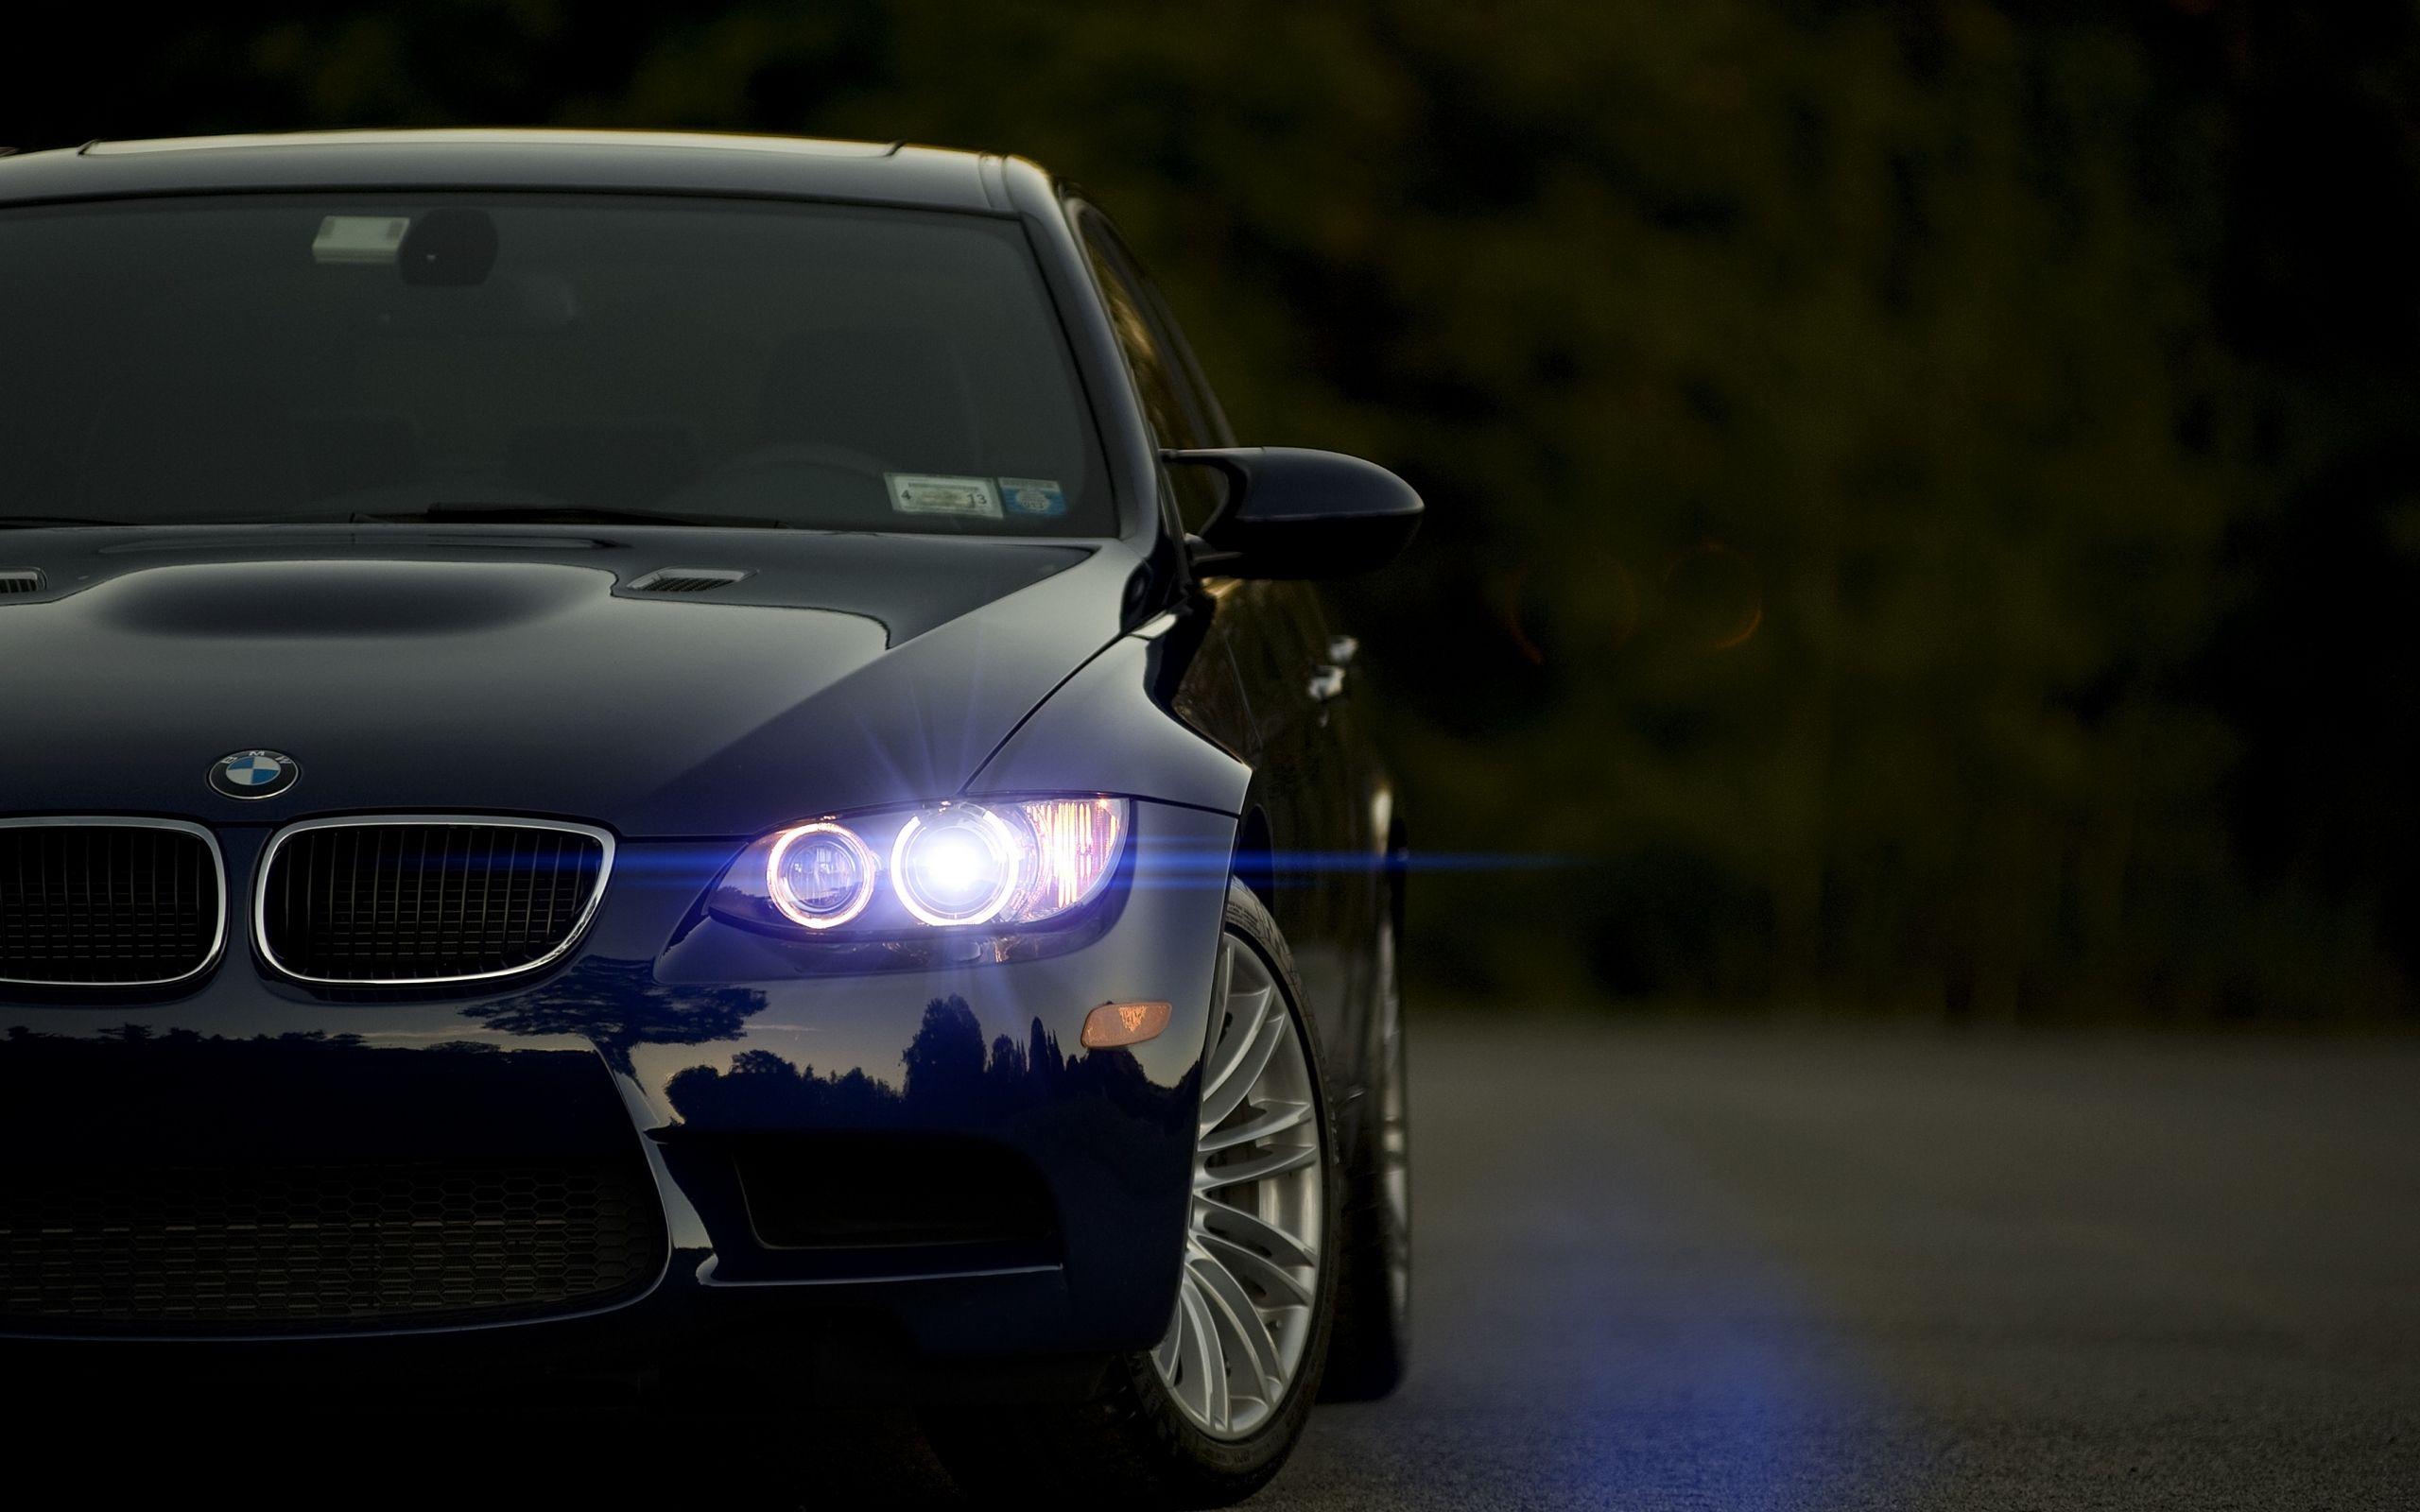 BMW luxury and sports car on desktop background HD